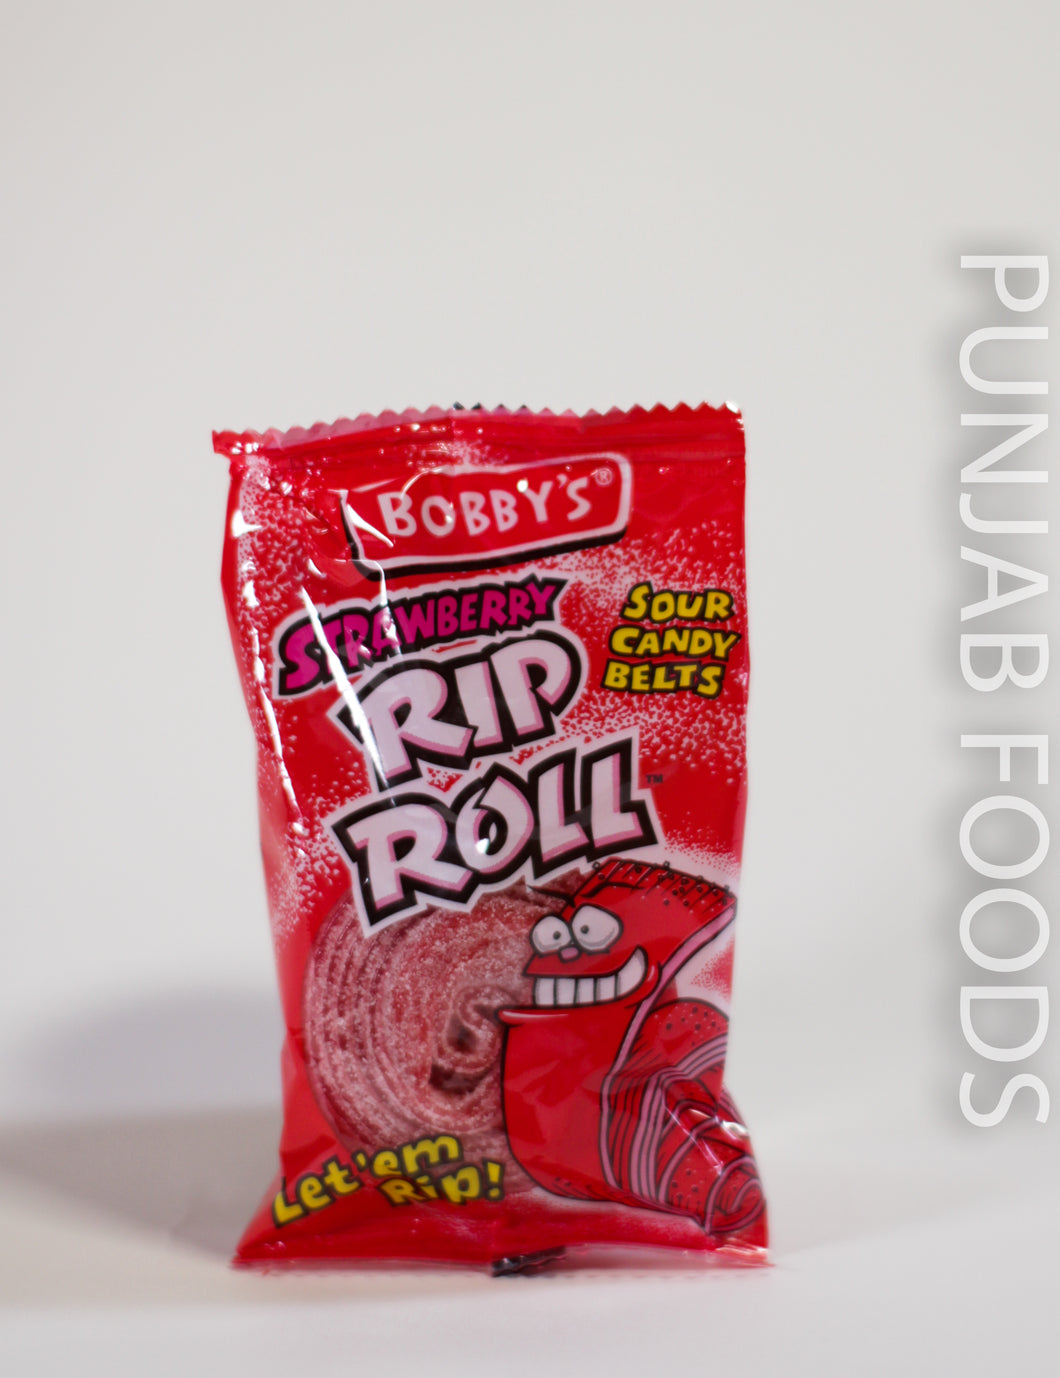 Bobby's Strawberry Rip Roll